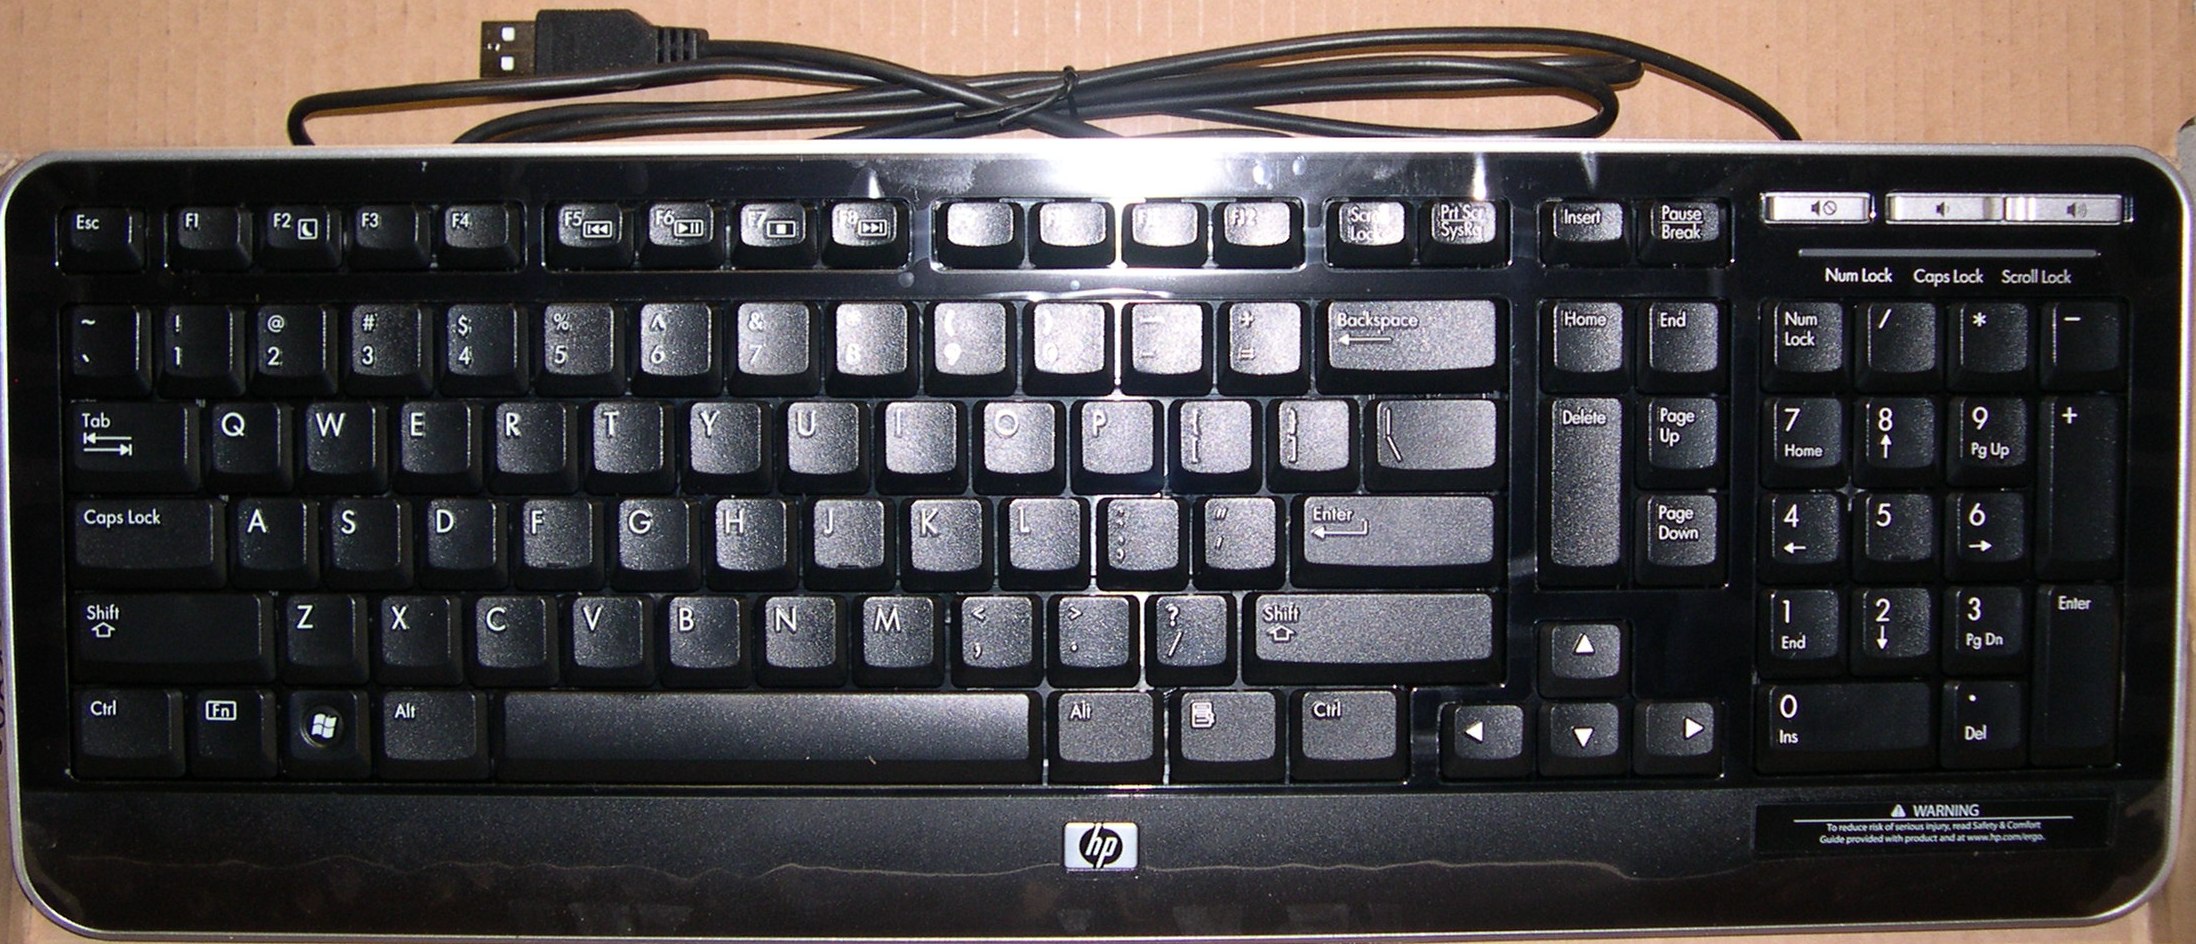 Hp keyboard model 5187 drivers for mac pro